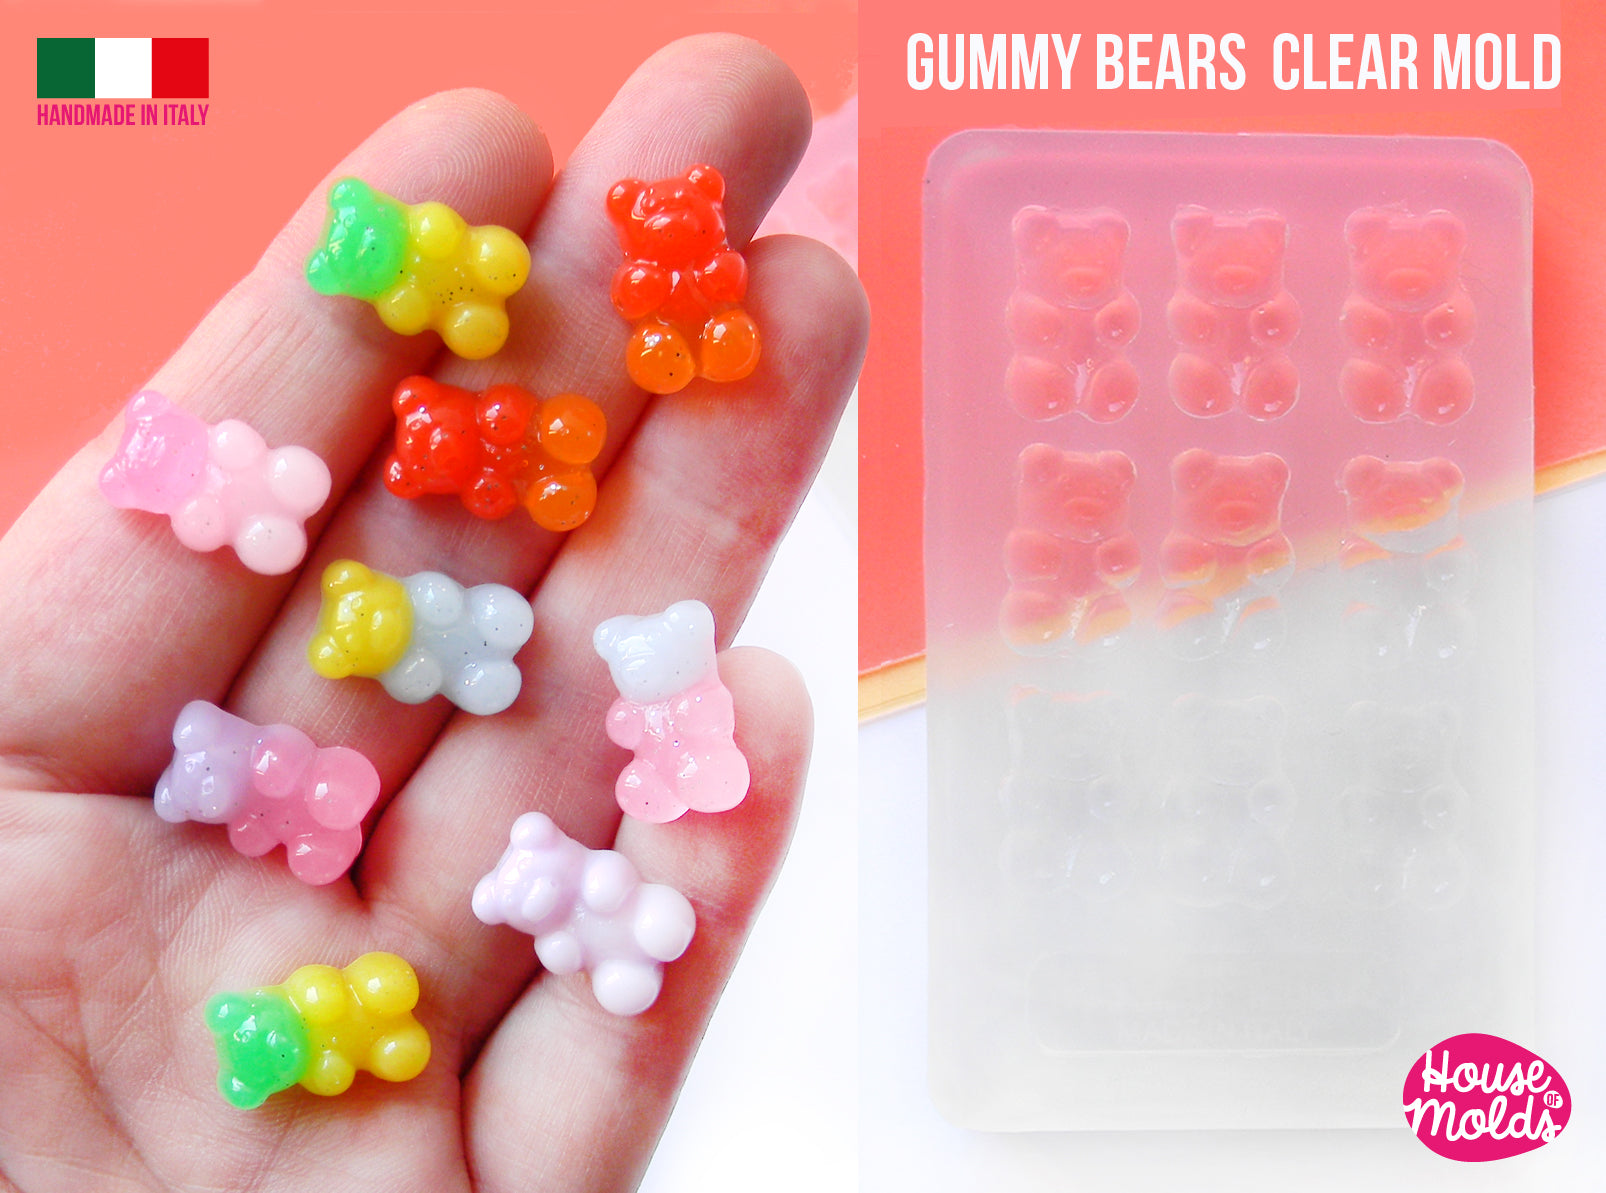 Customizable 1-Inch Gummy Mold